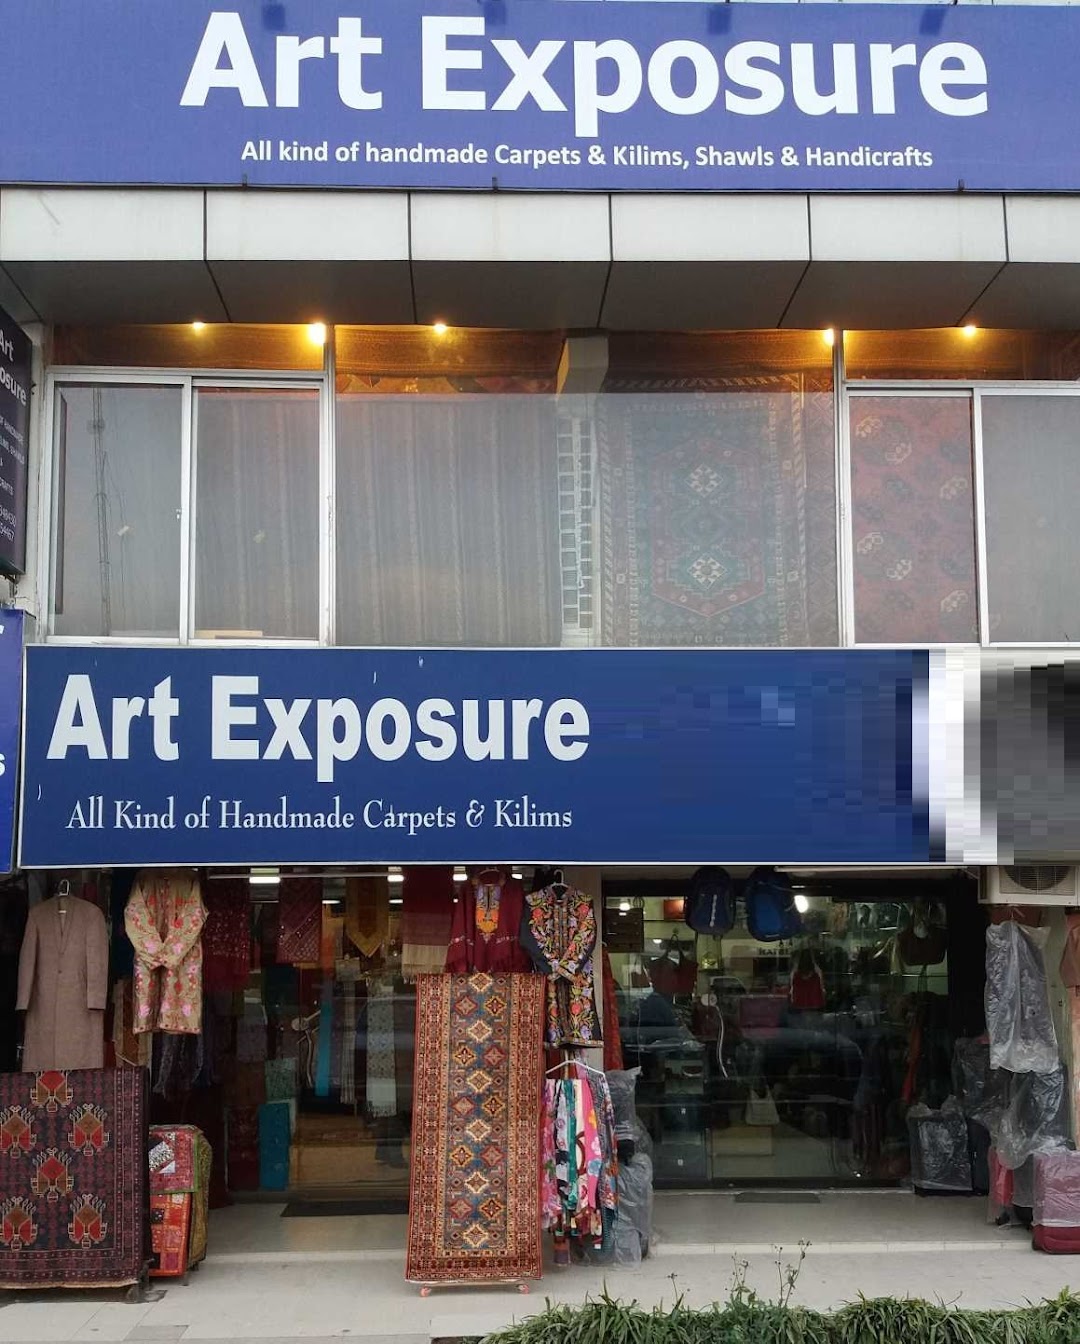 Art Exposure (Handmade Rugs & Kilims)